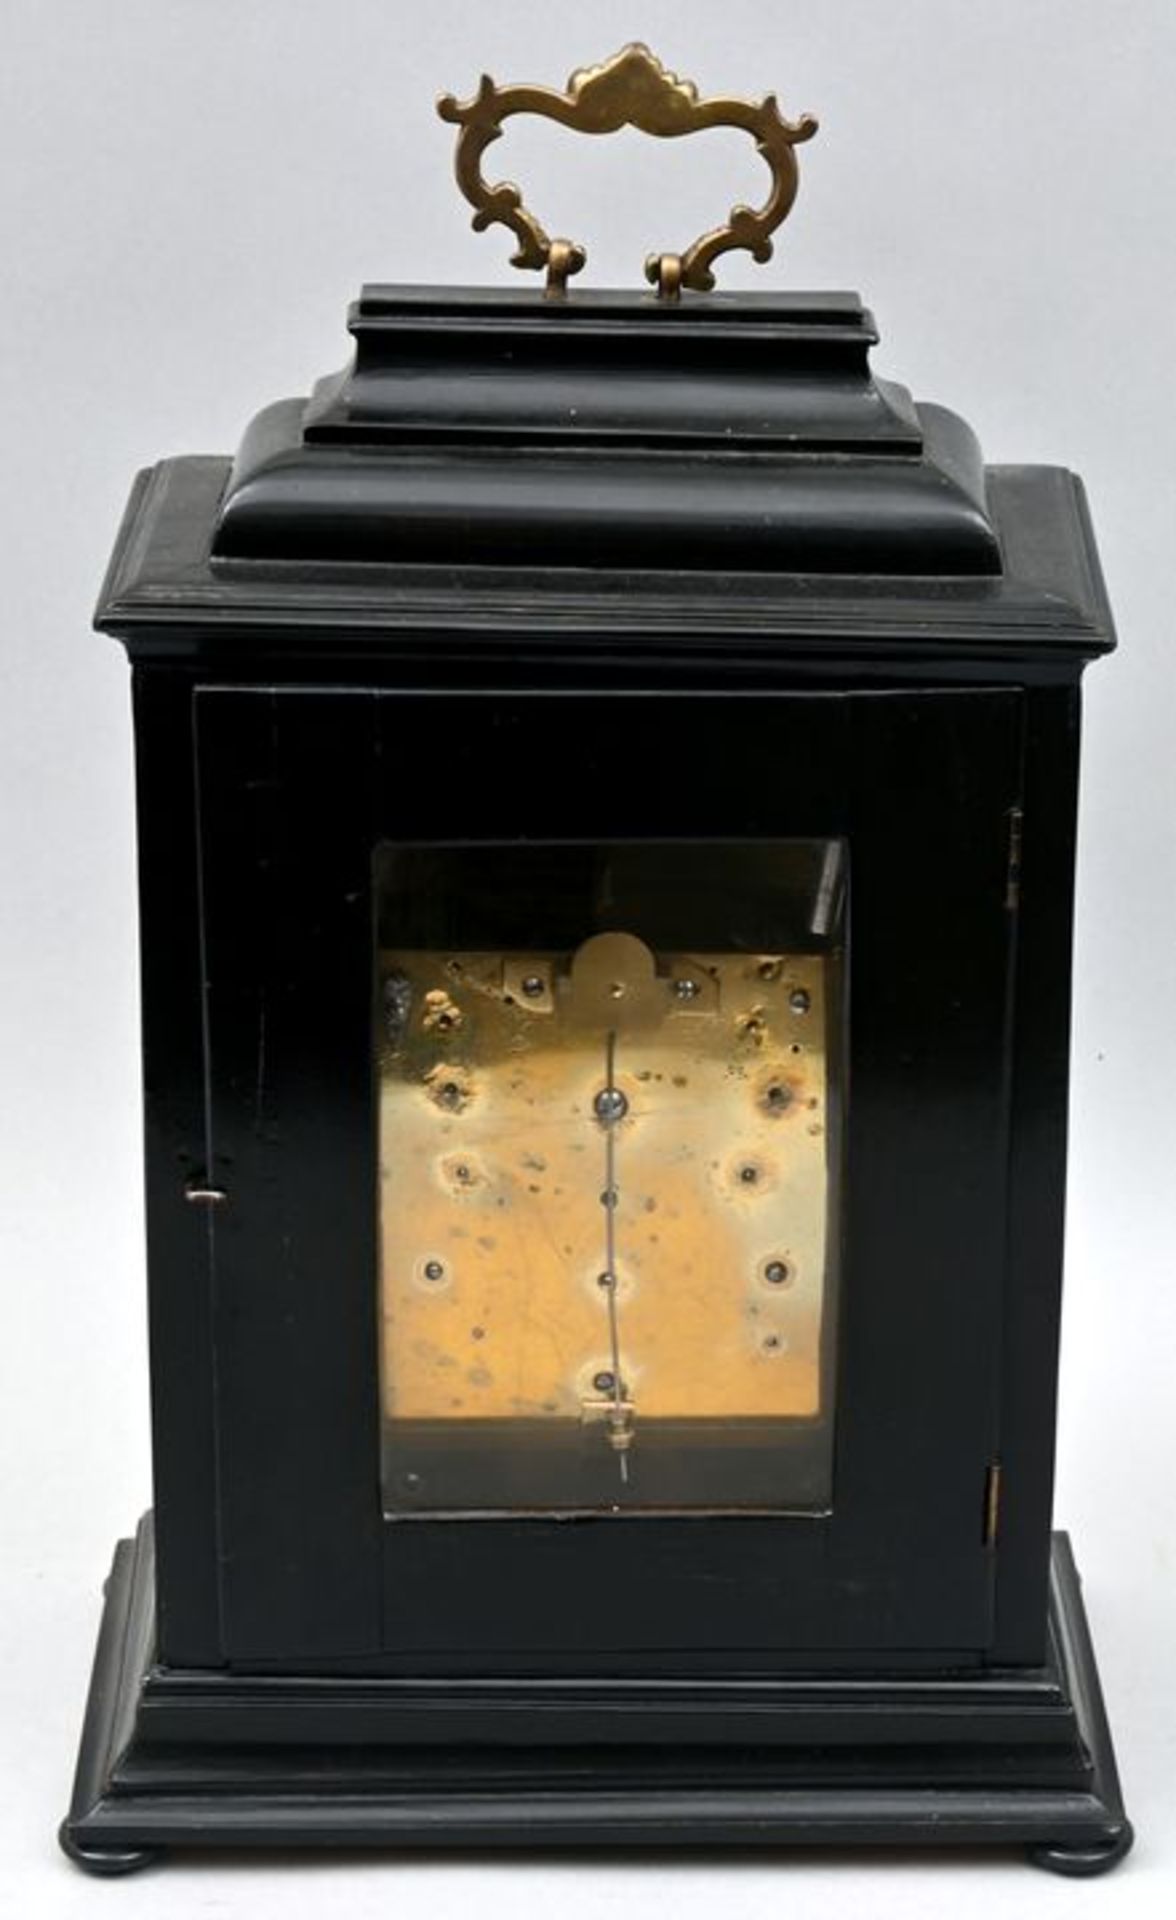 906 Stockuhr, Holz, Freimaurer/ bracket clock - Image 6 of 7